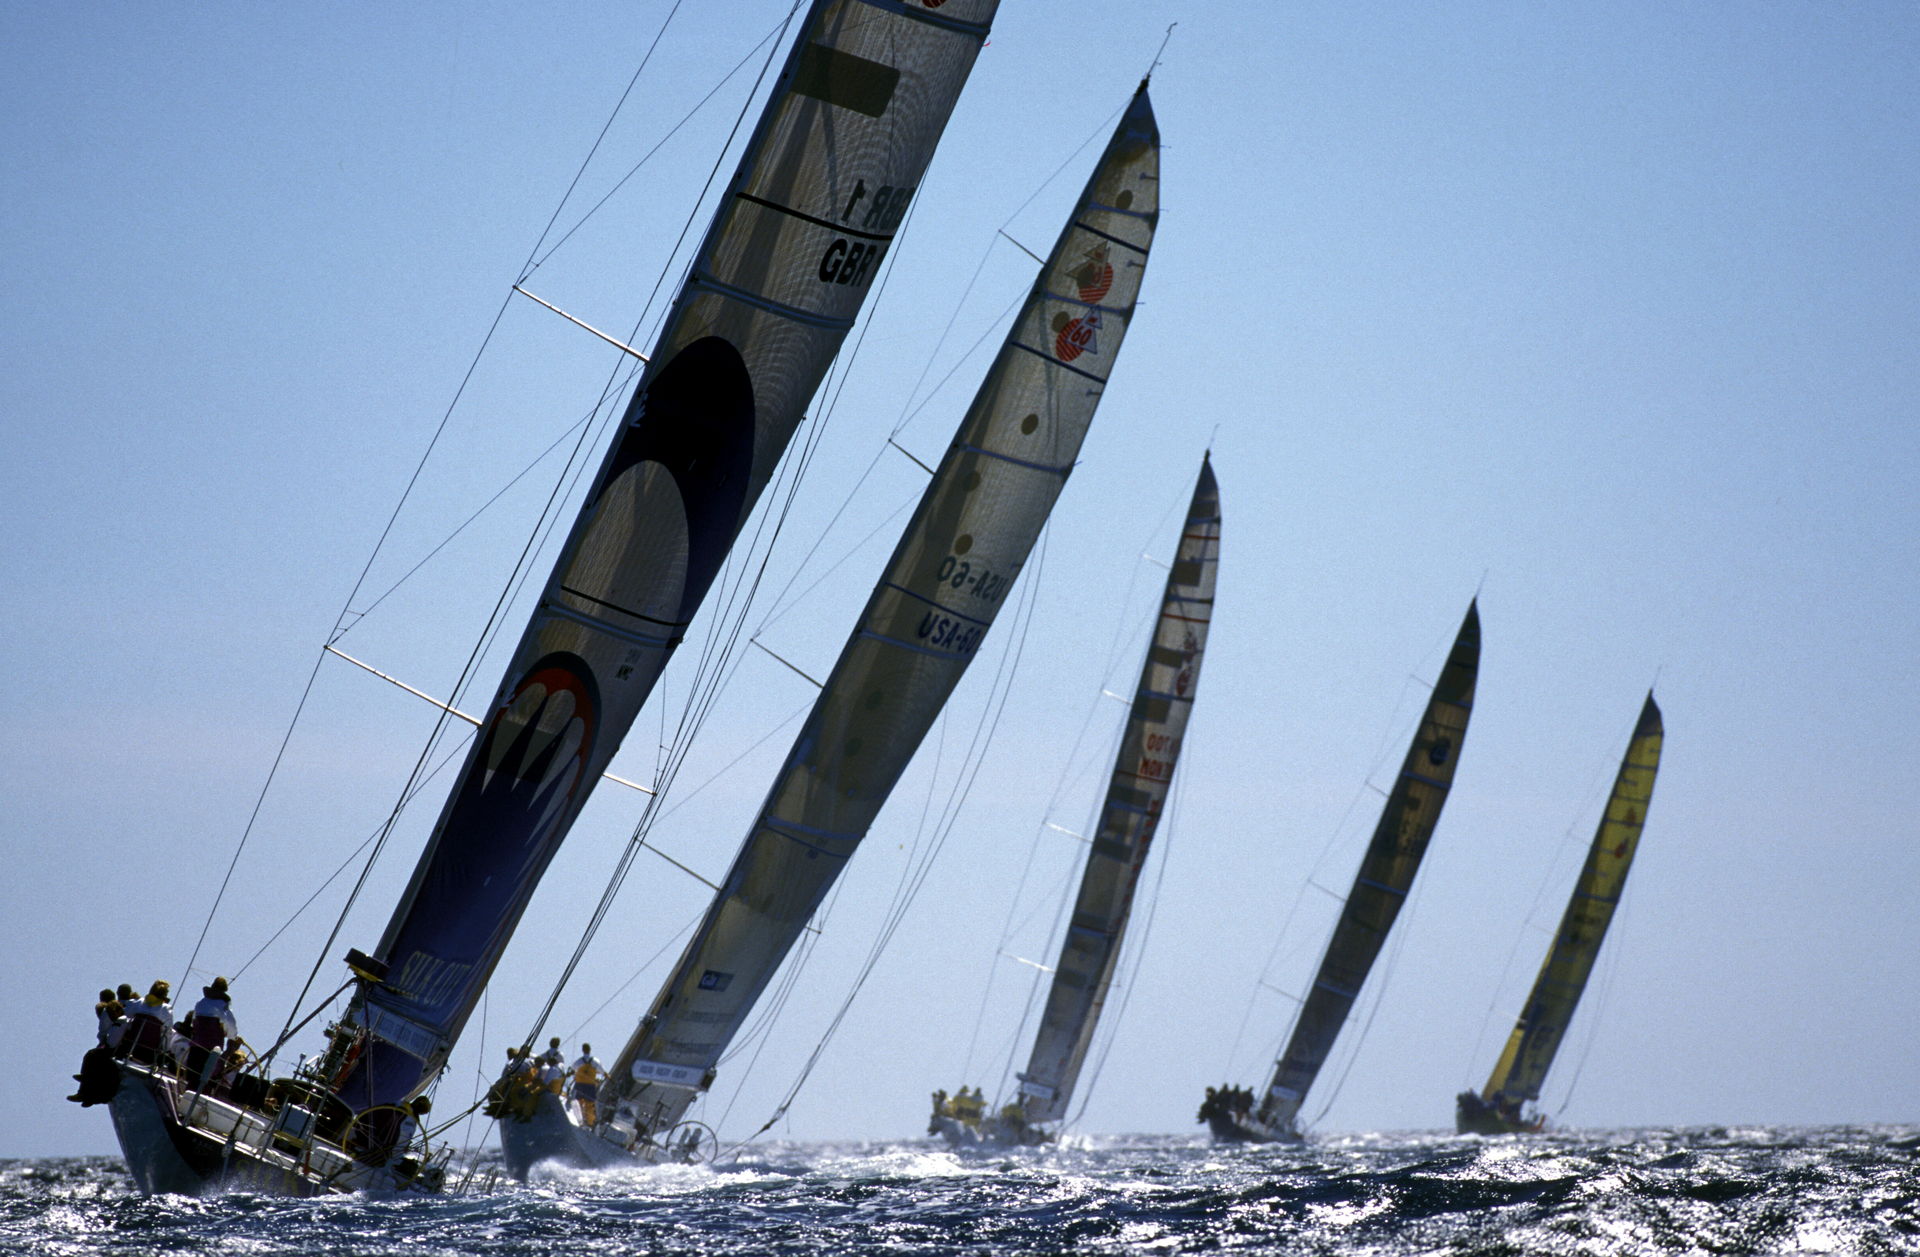 fastnet sailboat race